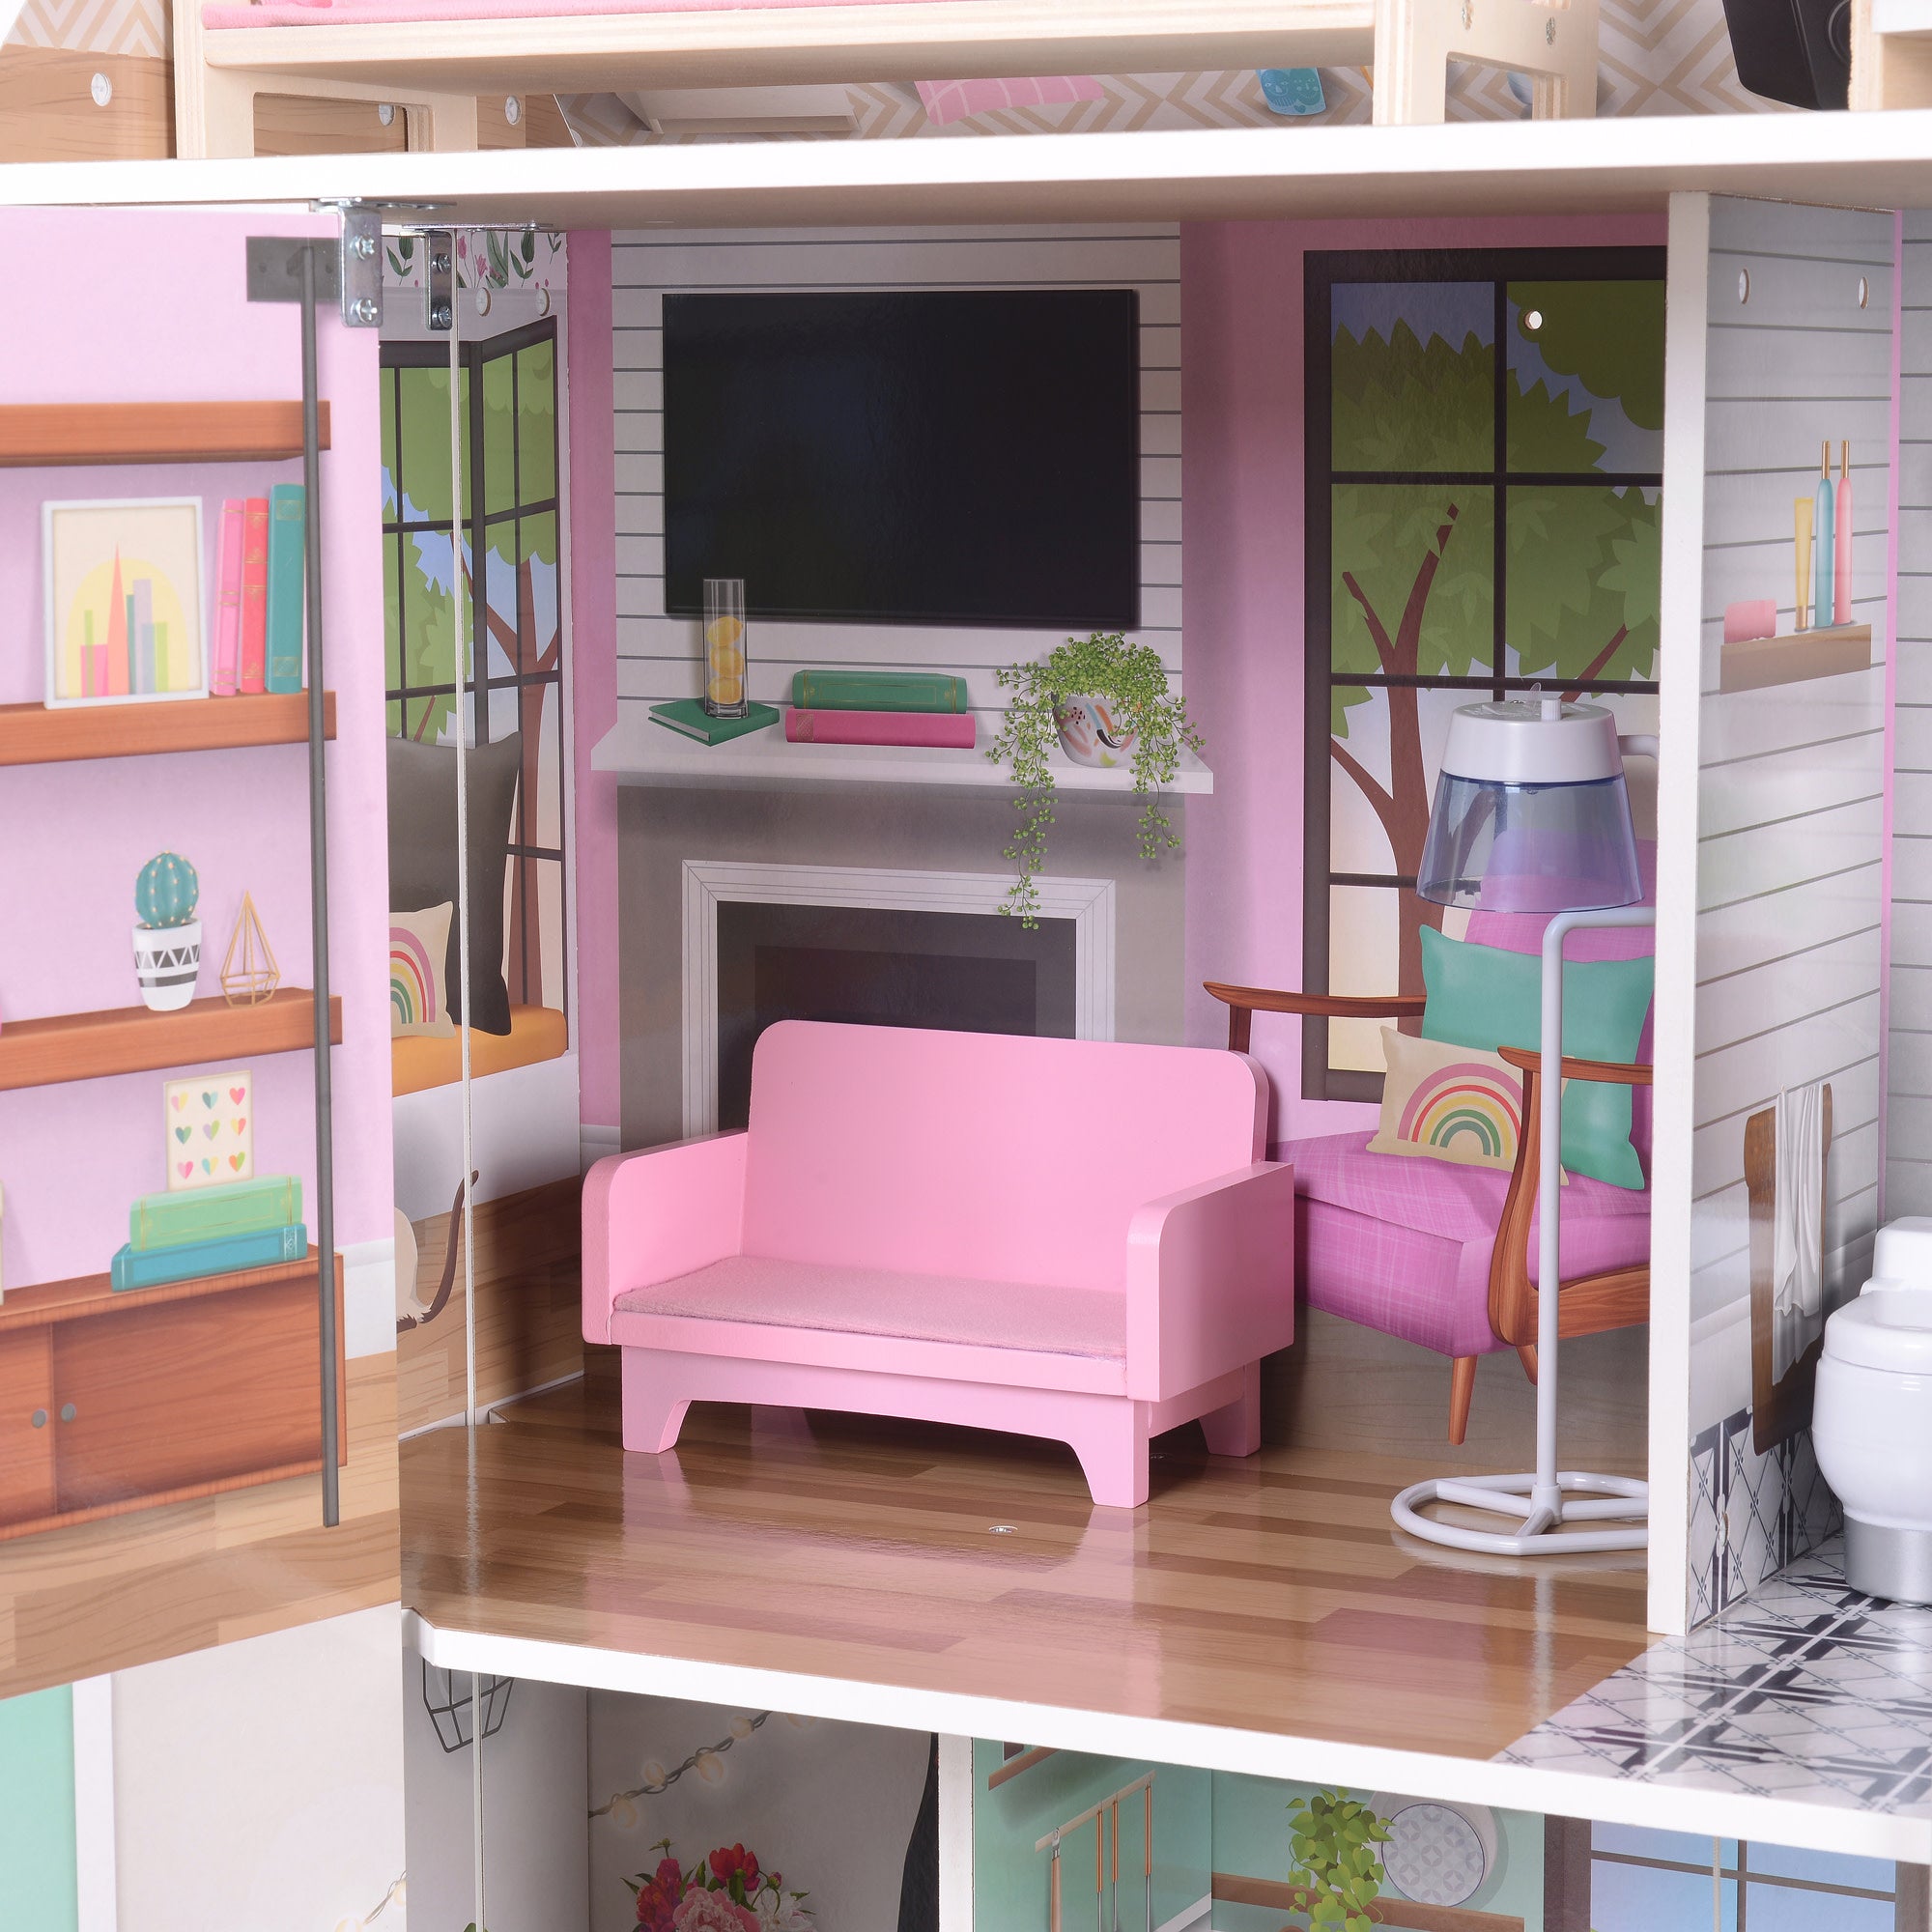 Olivia's Little World Wooden Dreamland Farmhouse Dollhouse Set